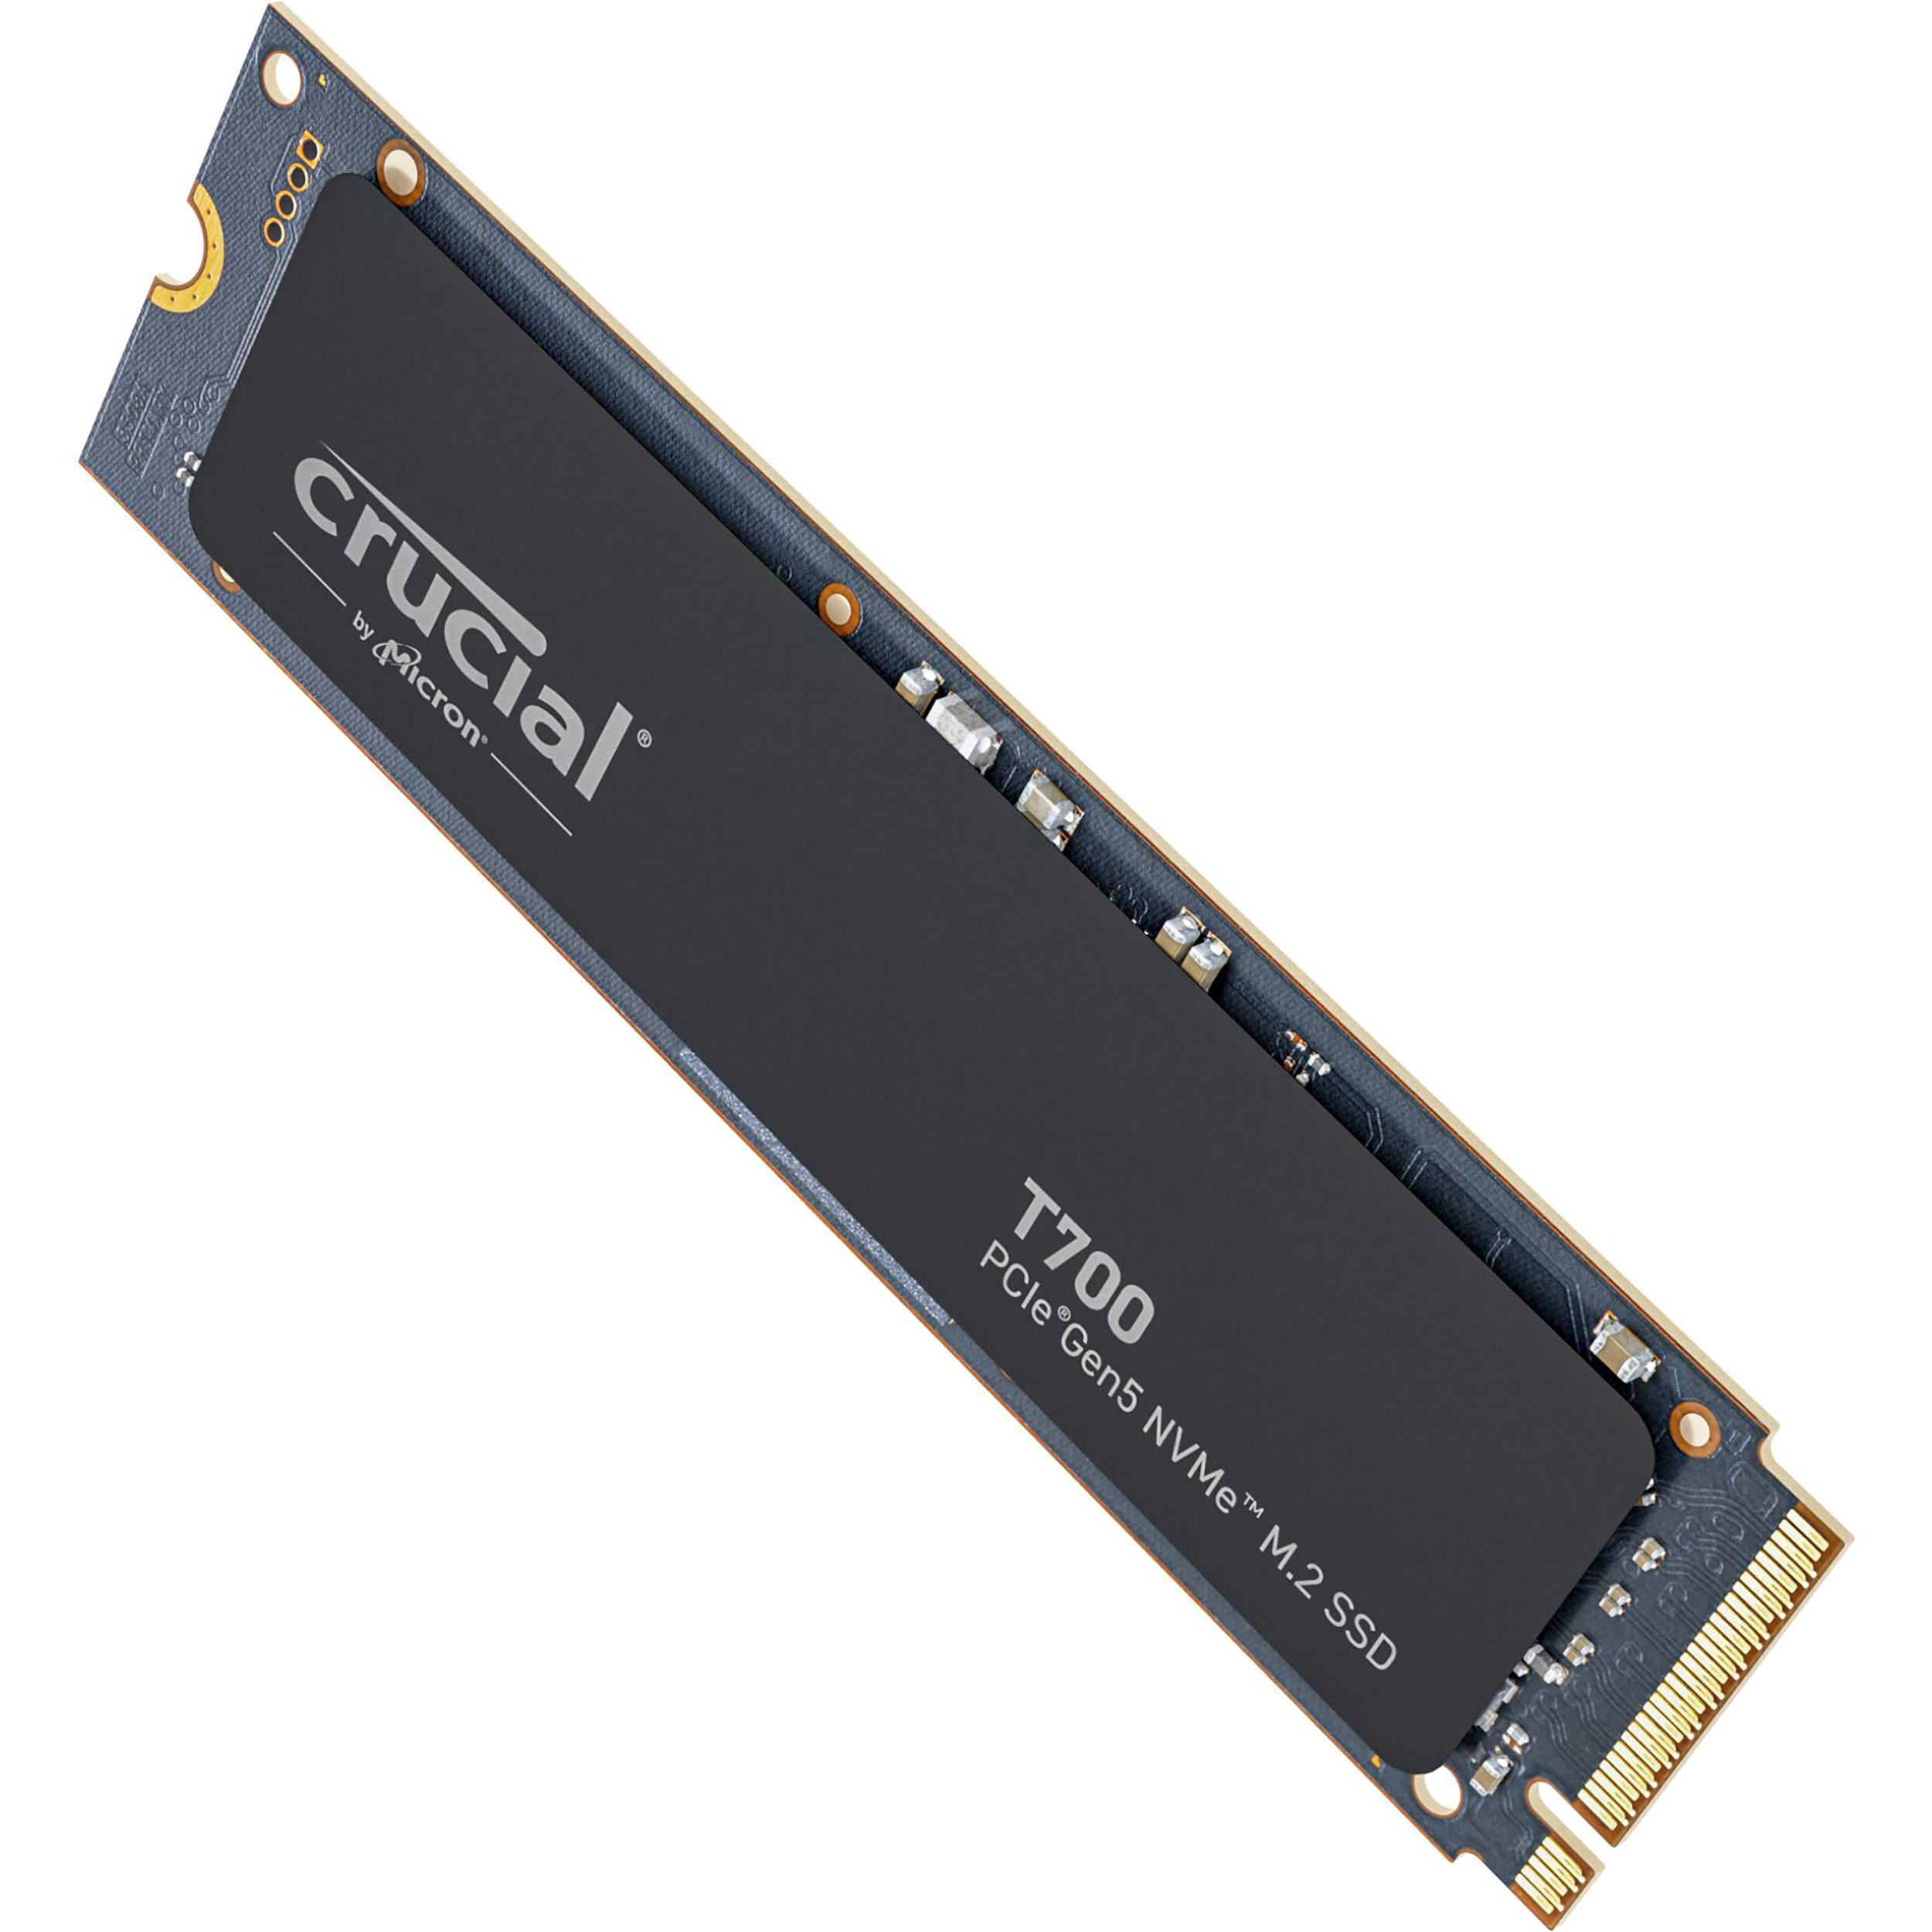 NVMe SSD, intern 2 Gen5 PCIe T700 NVMe, SSD M.2 TB via CRUCIAL